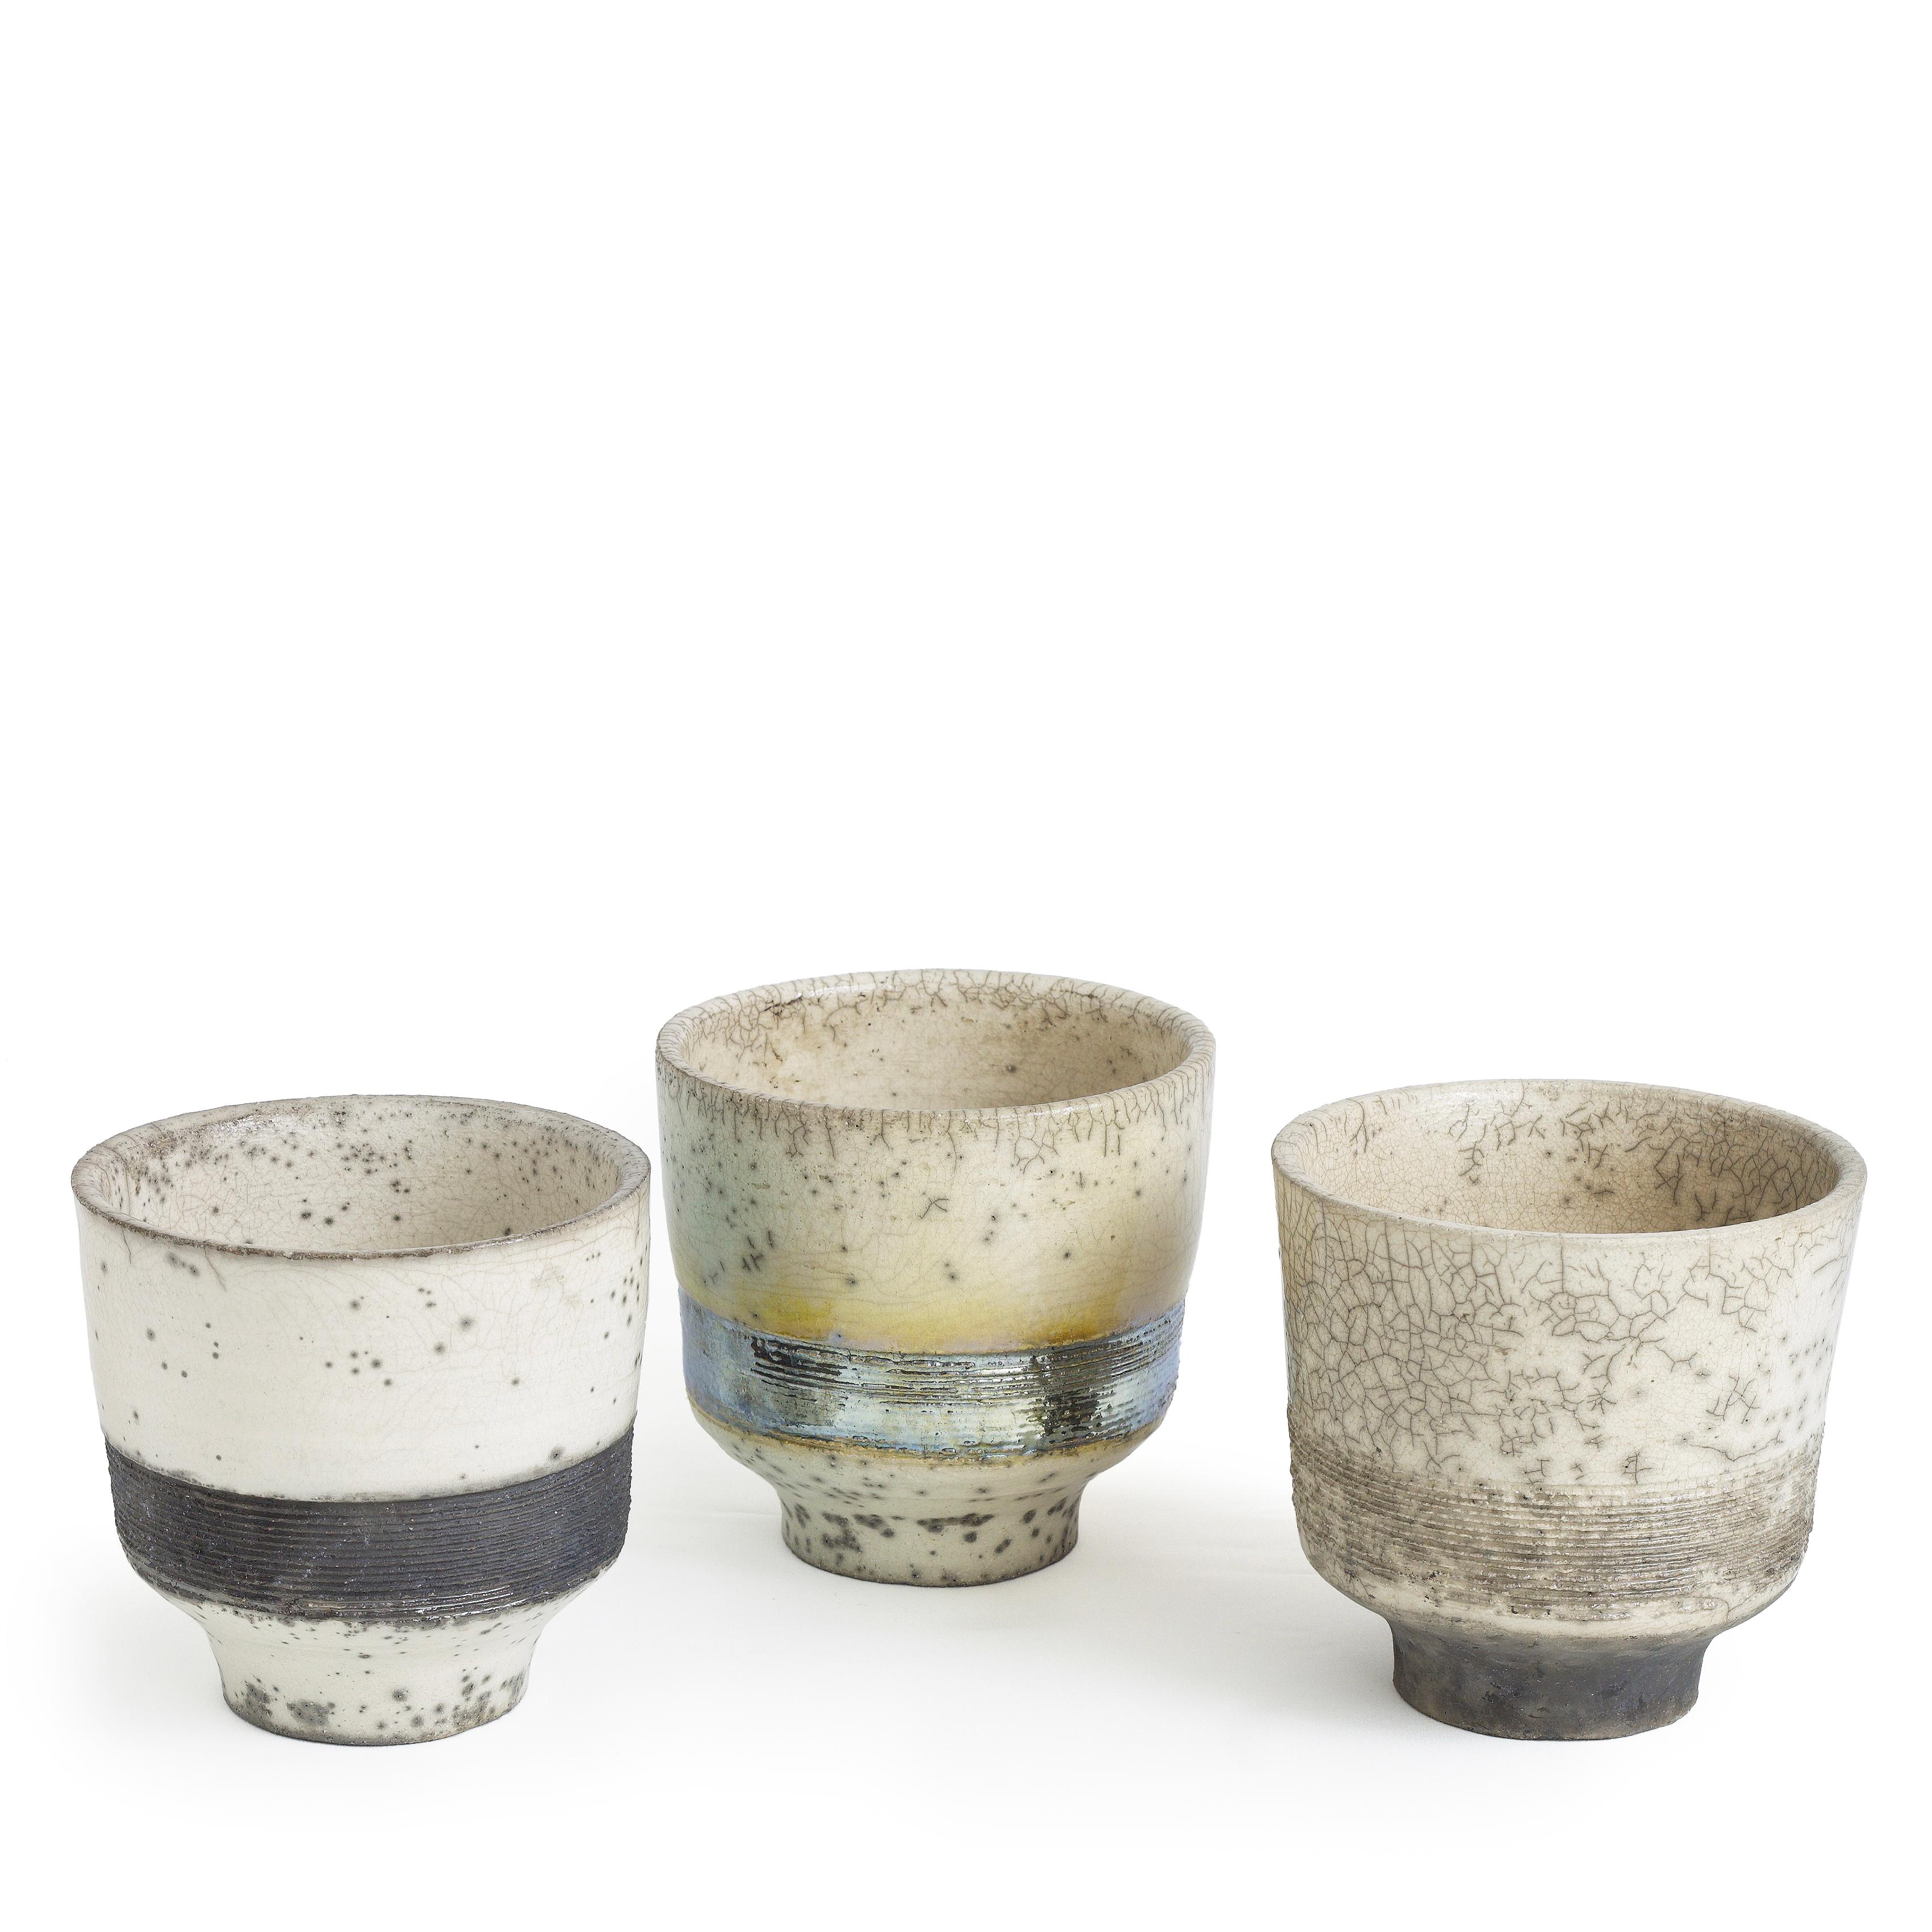 Japanese Yunomi Tea Cup Raku Ceramic Silver Band In New Condition For Sale In monza, Monza and Brianza